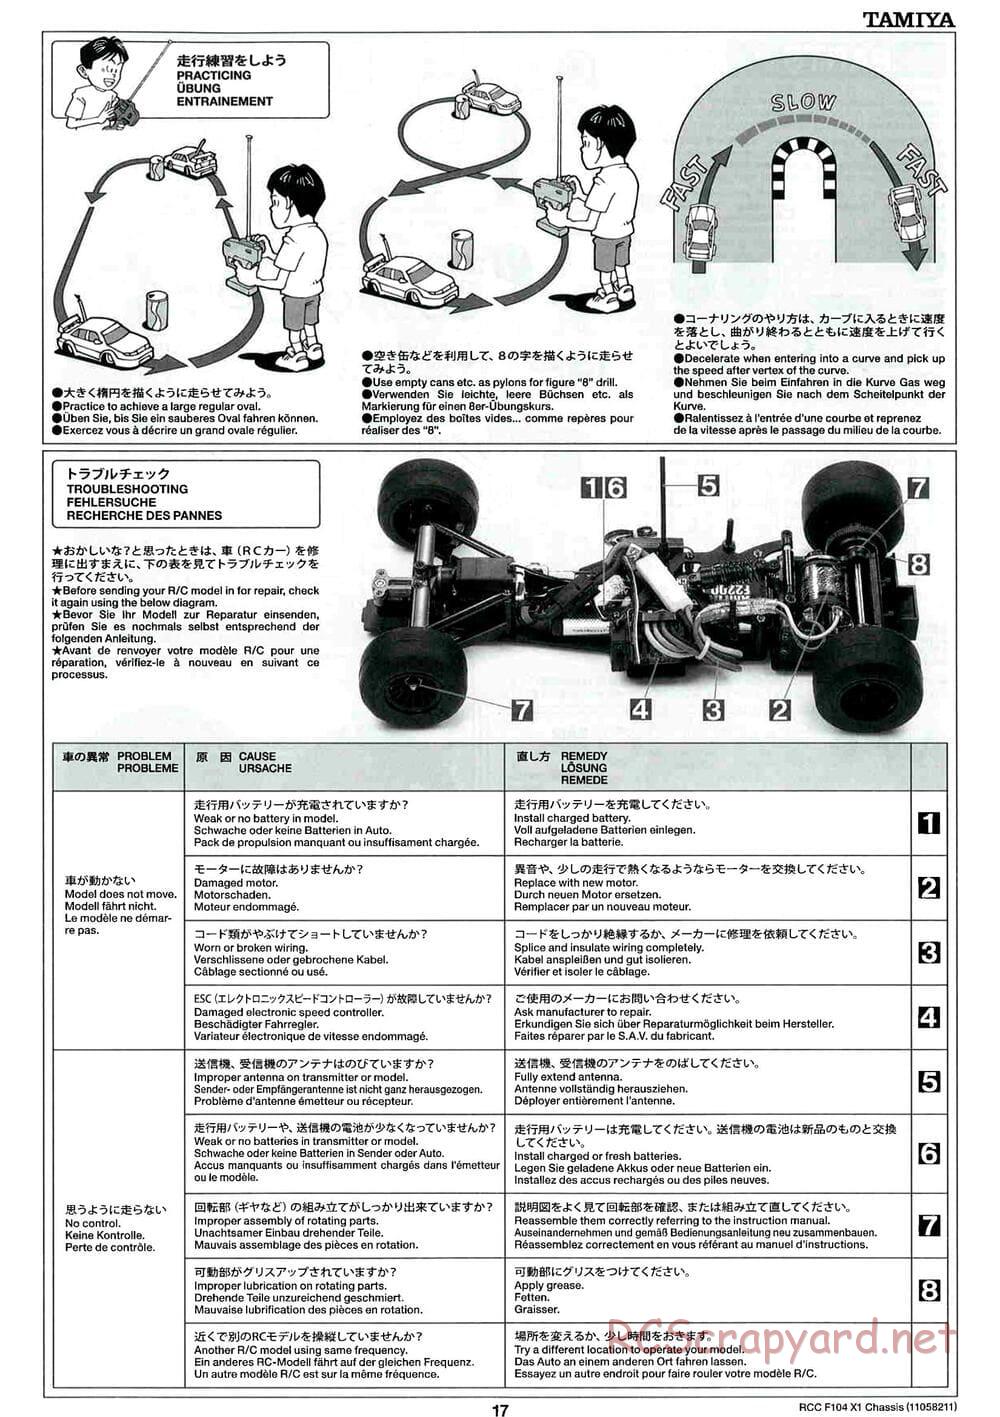 Tamiya - F104X1 Chassis - Manual - Page 17